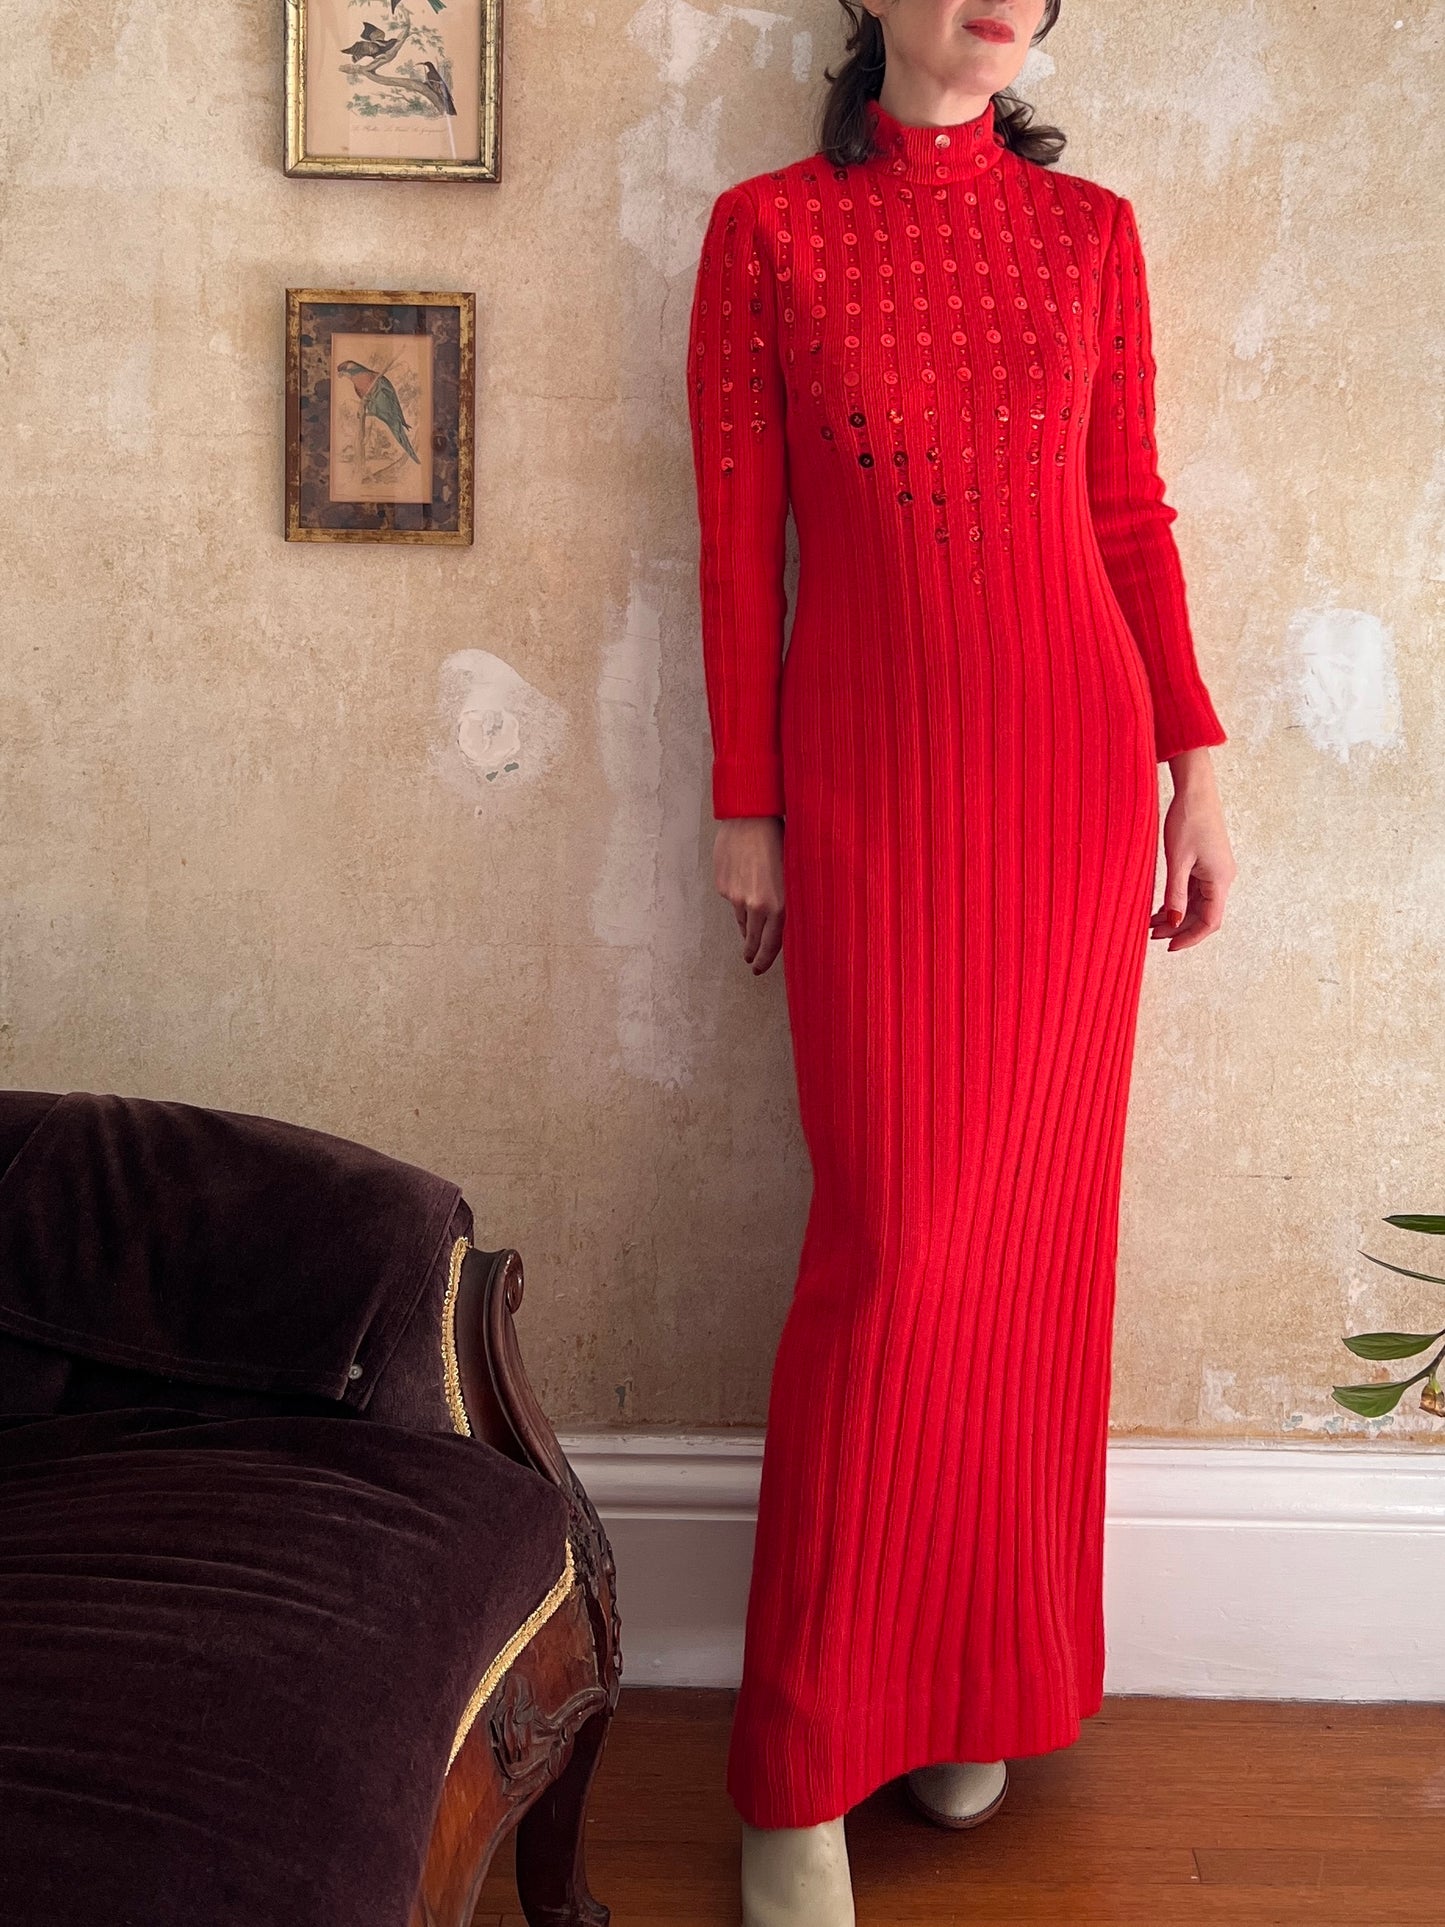 1970s Rizkallah for Malcolm Starr Sequin Studded Knit Body Con Dress M